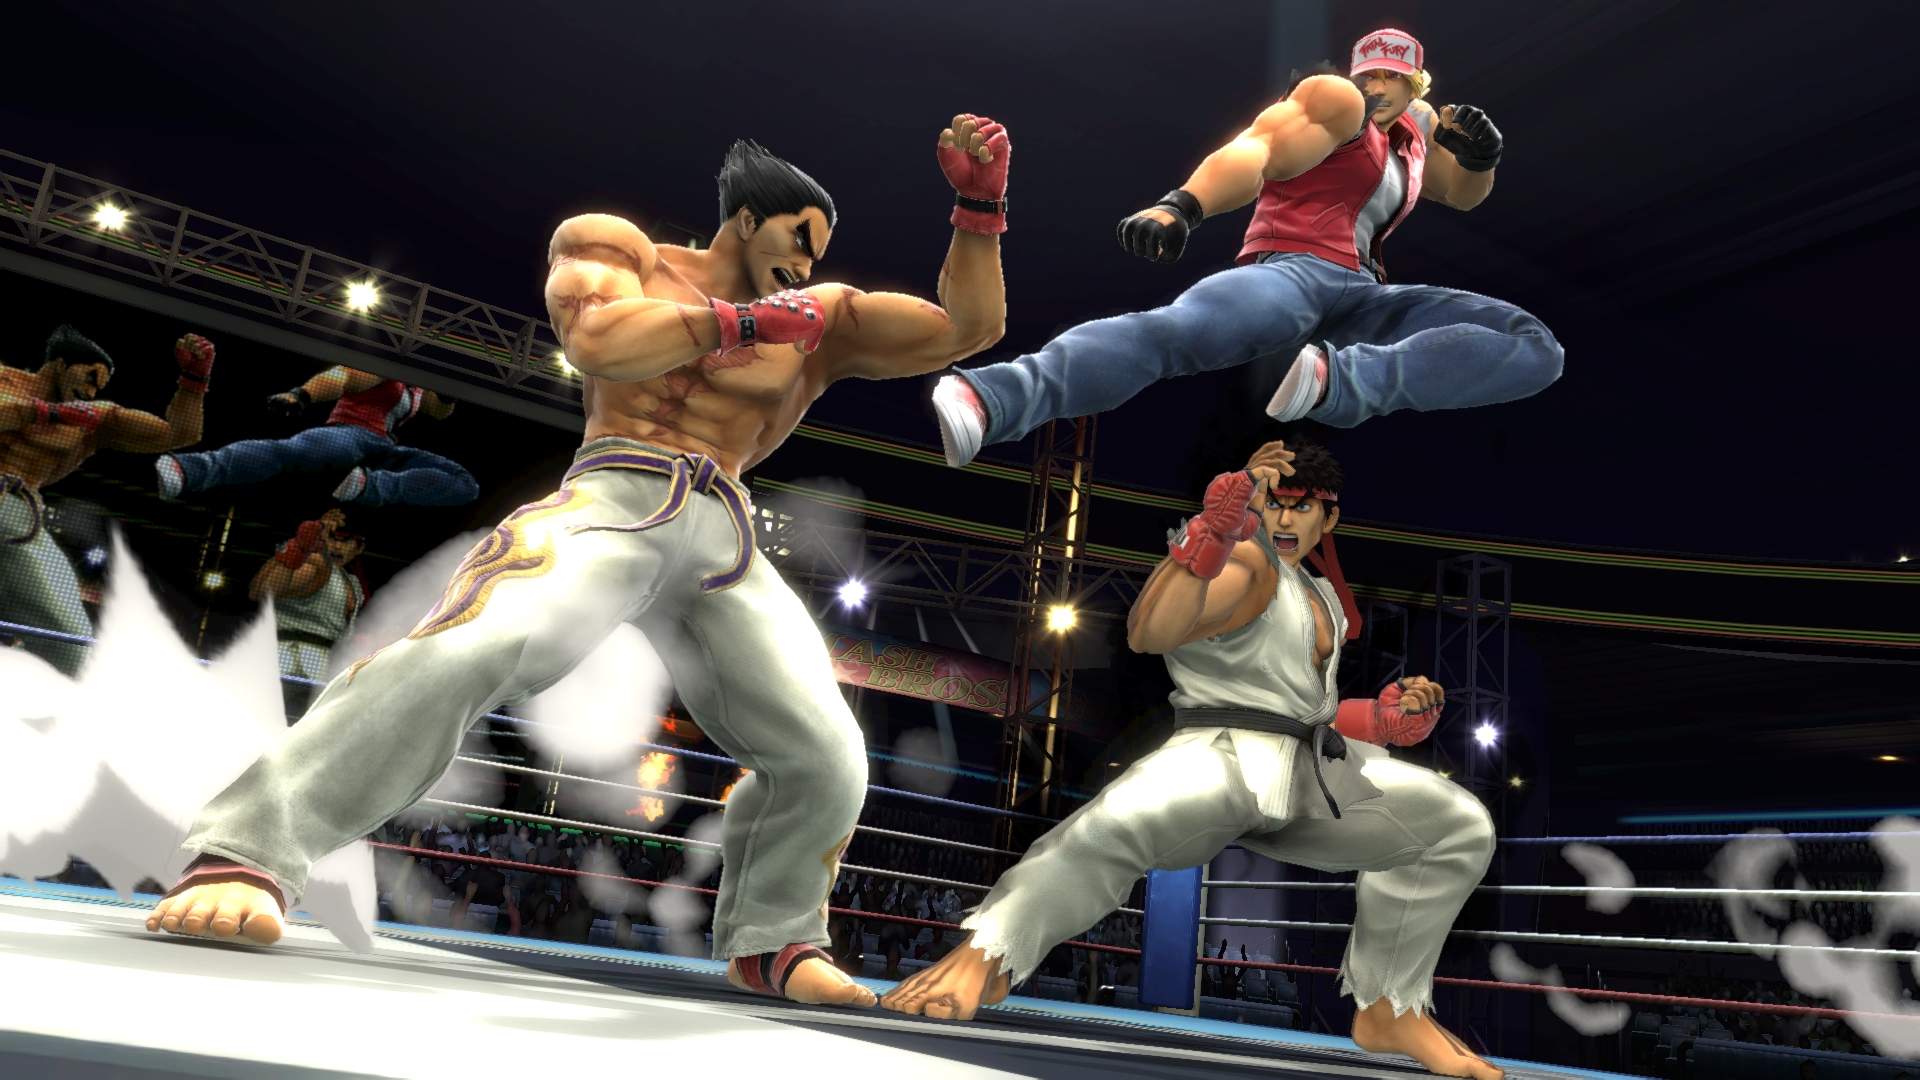 Tekken 8 Kazuya [Super Smash Bros. Ultimate] [Mods]